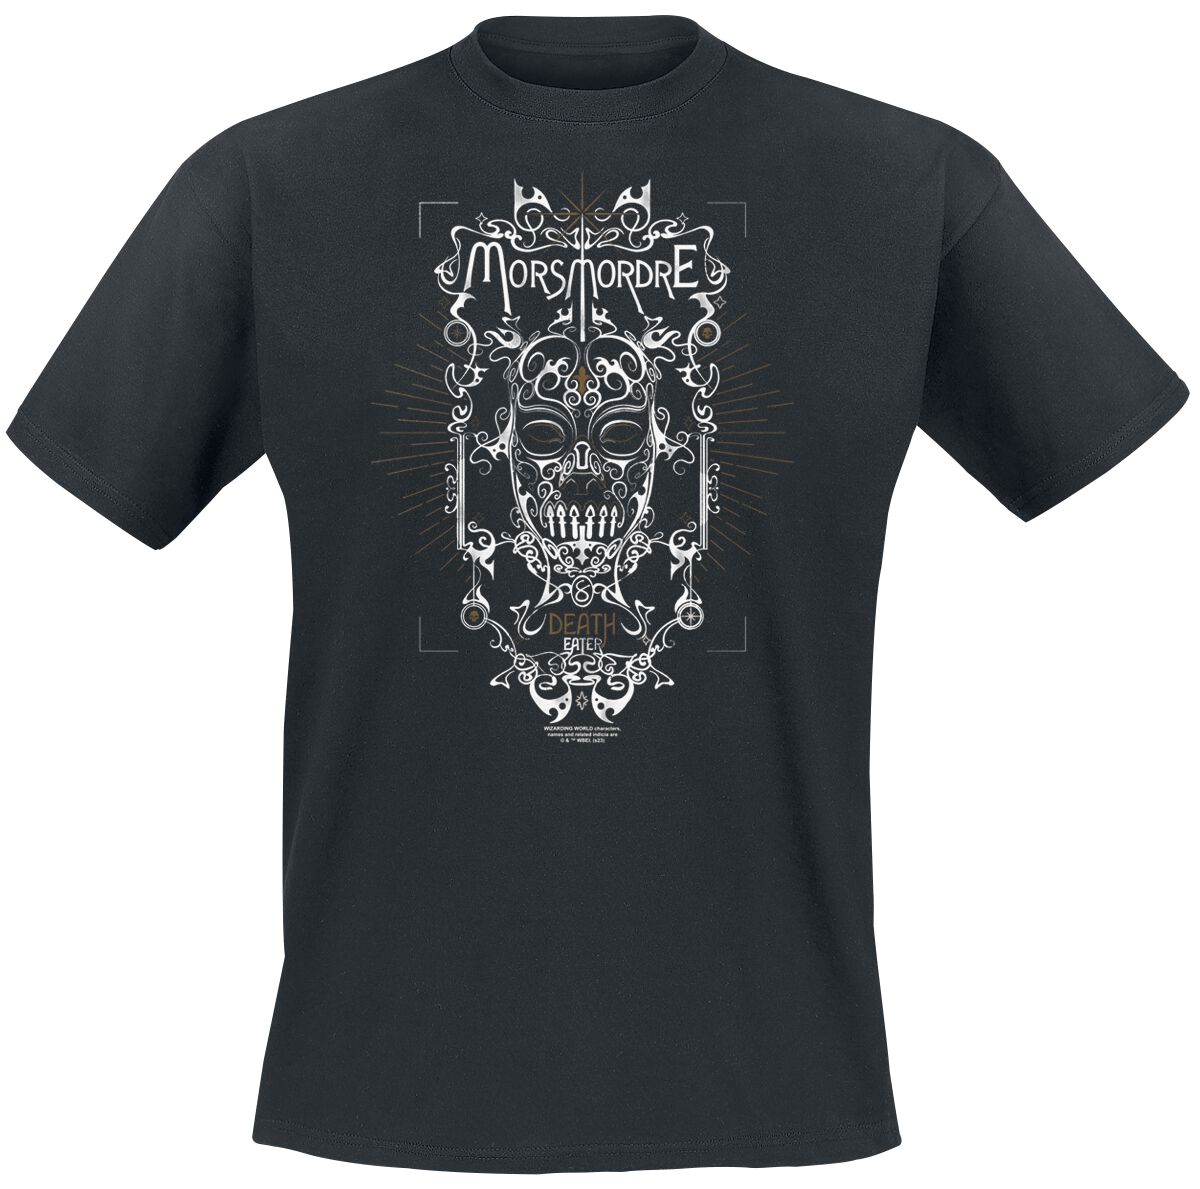 Harry Potter Morsmodre T-Shirt schwarz in XL